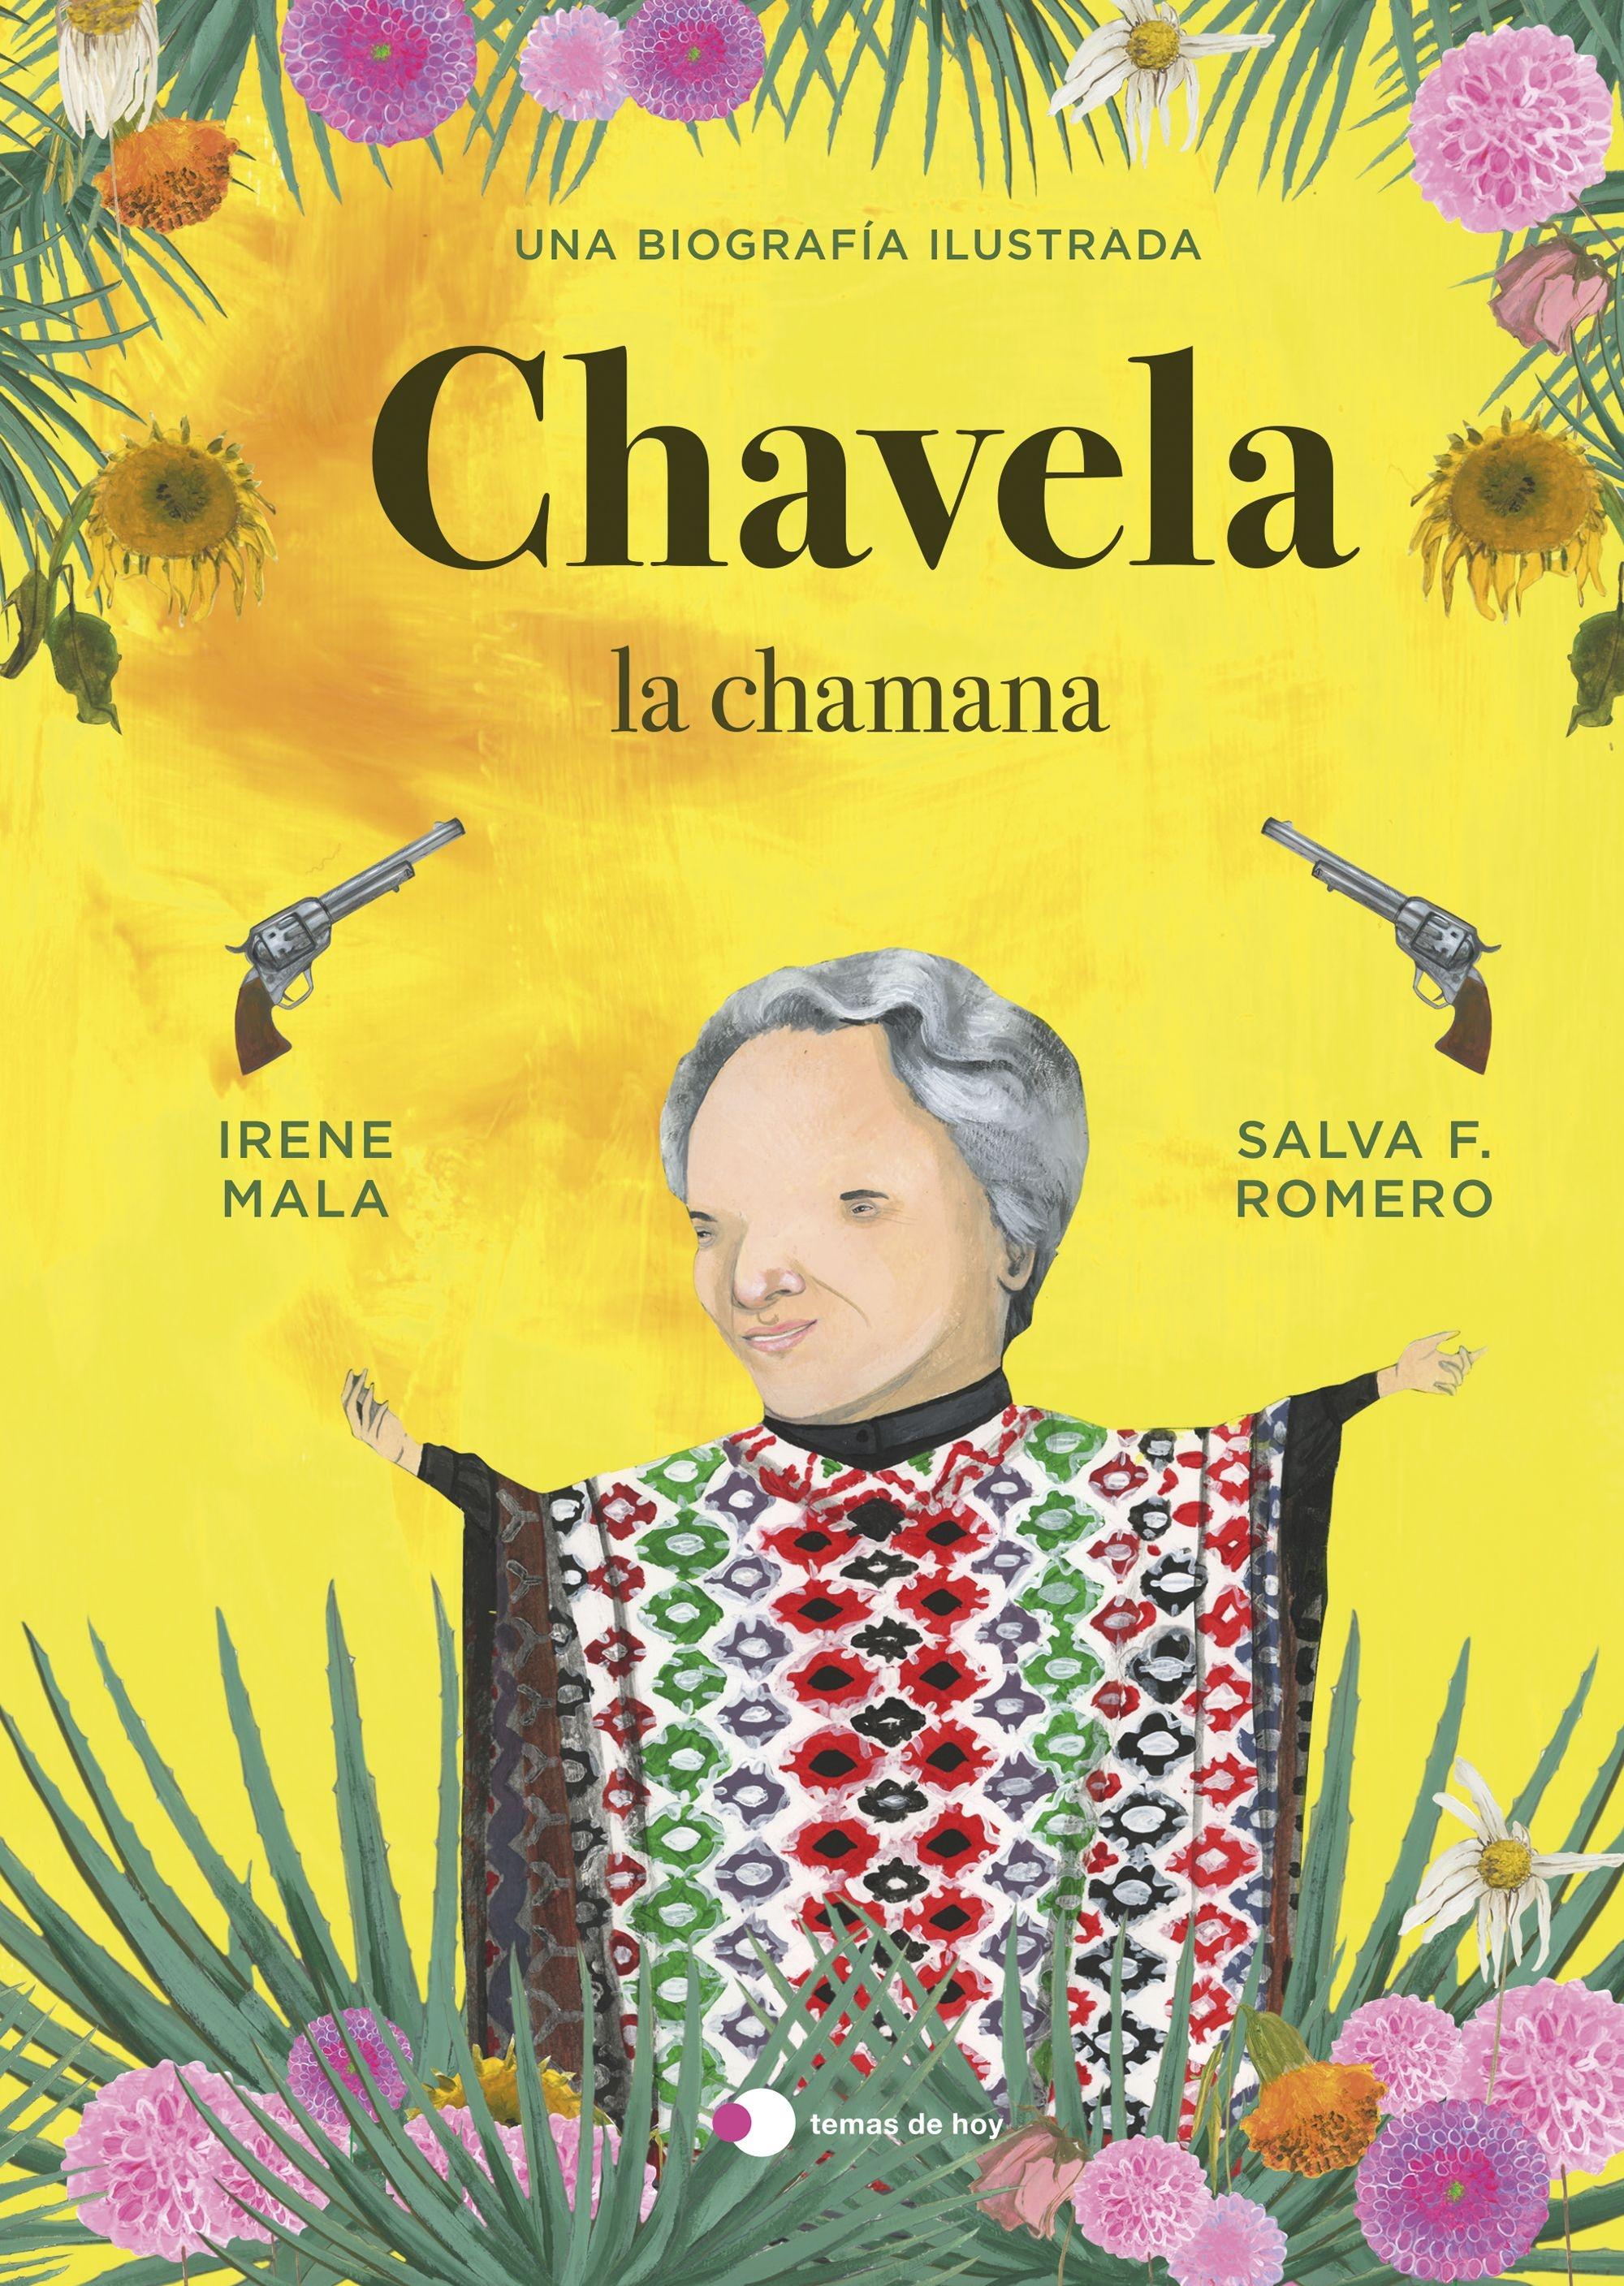 Chavela, la chamana "Una biografía ilustrada"